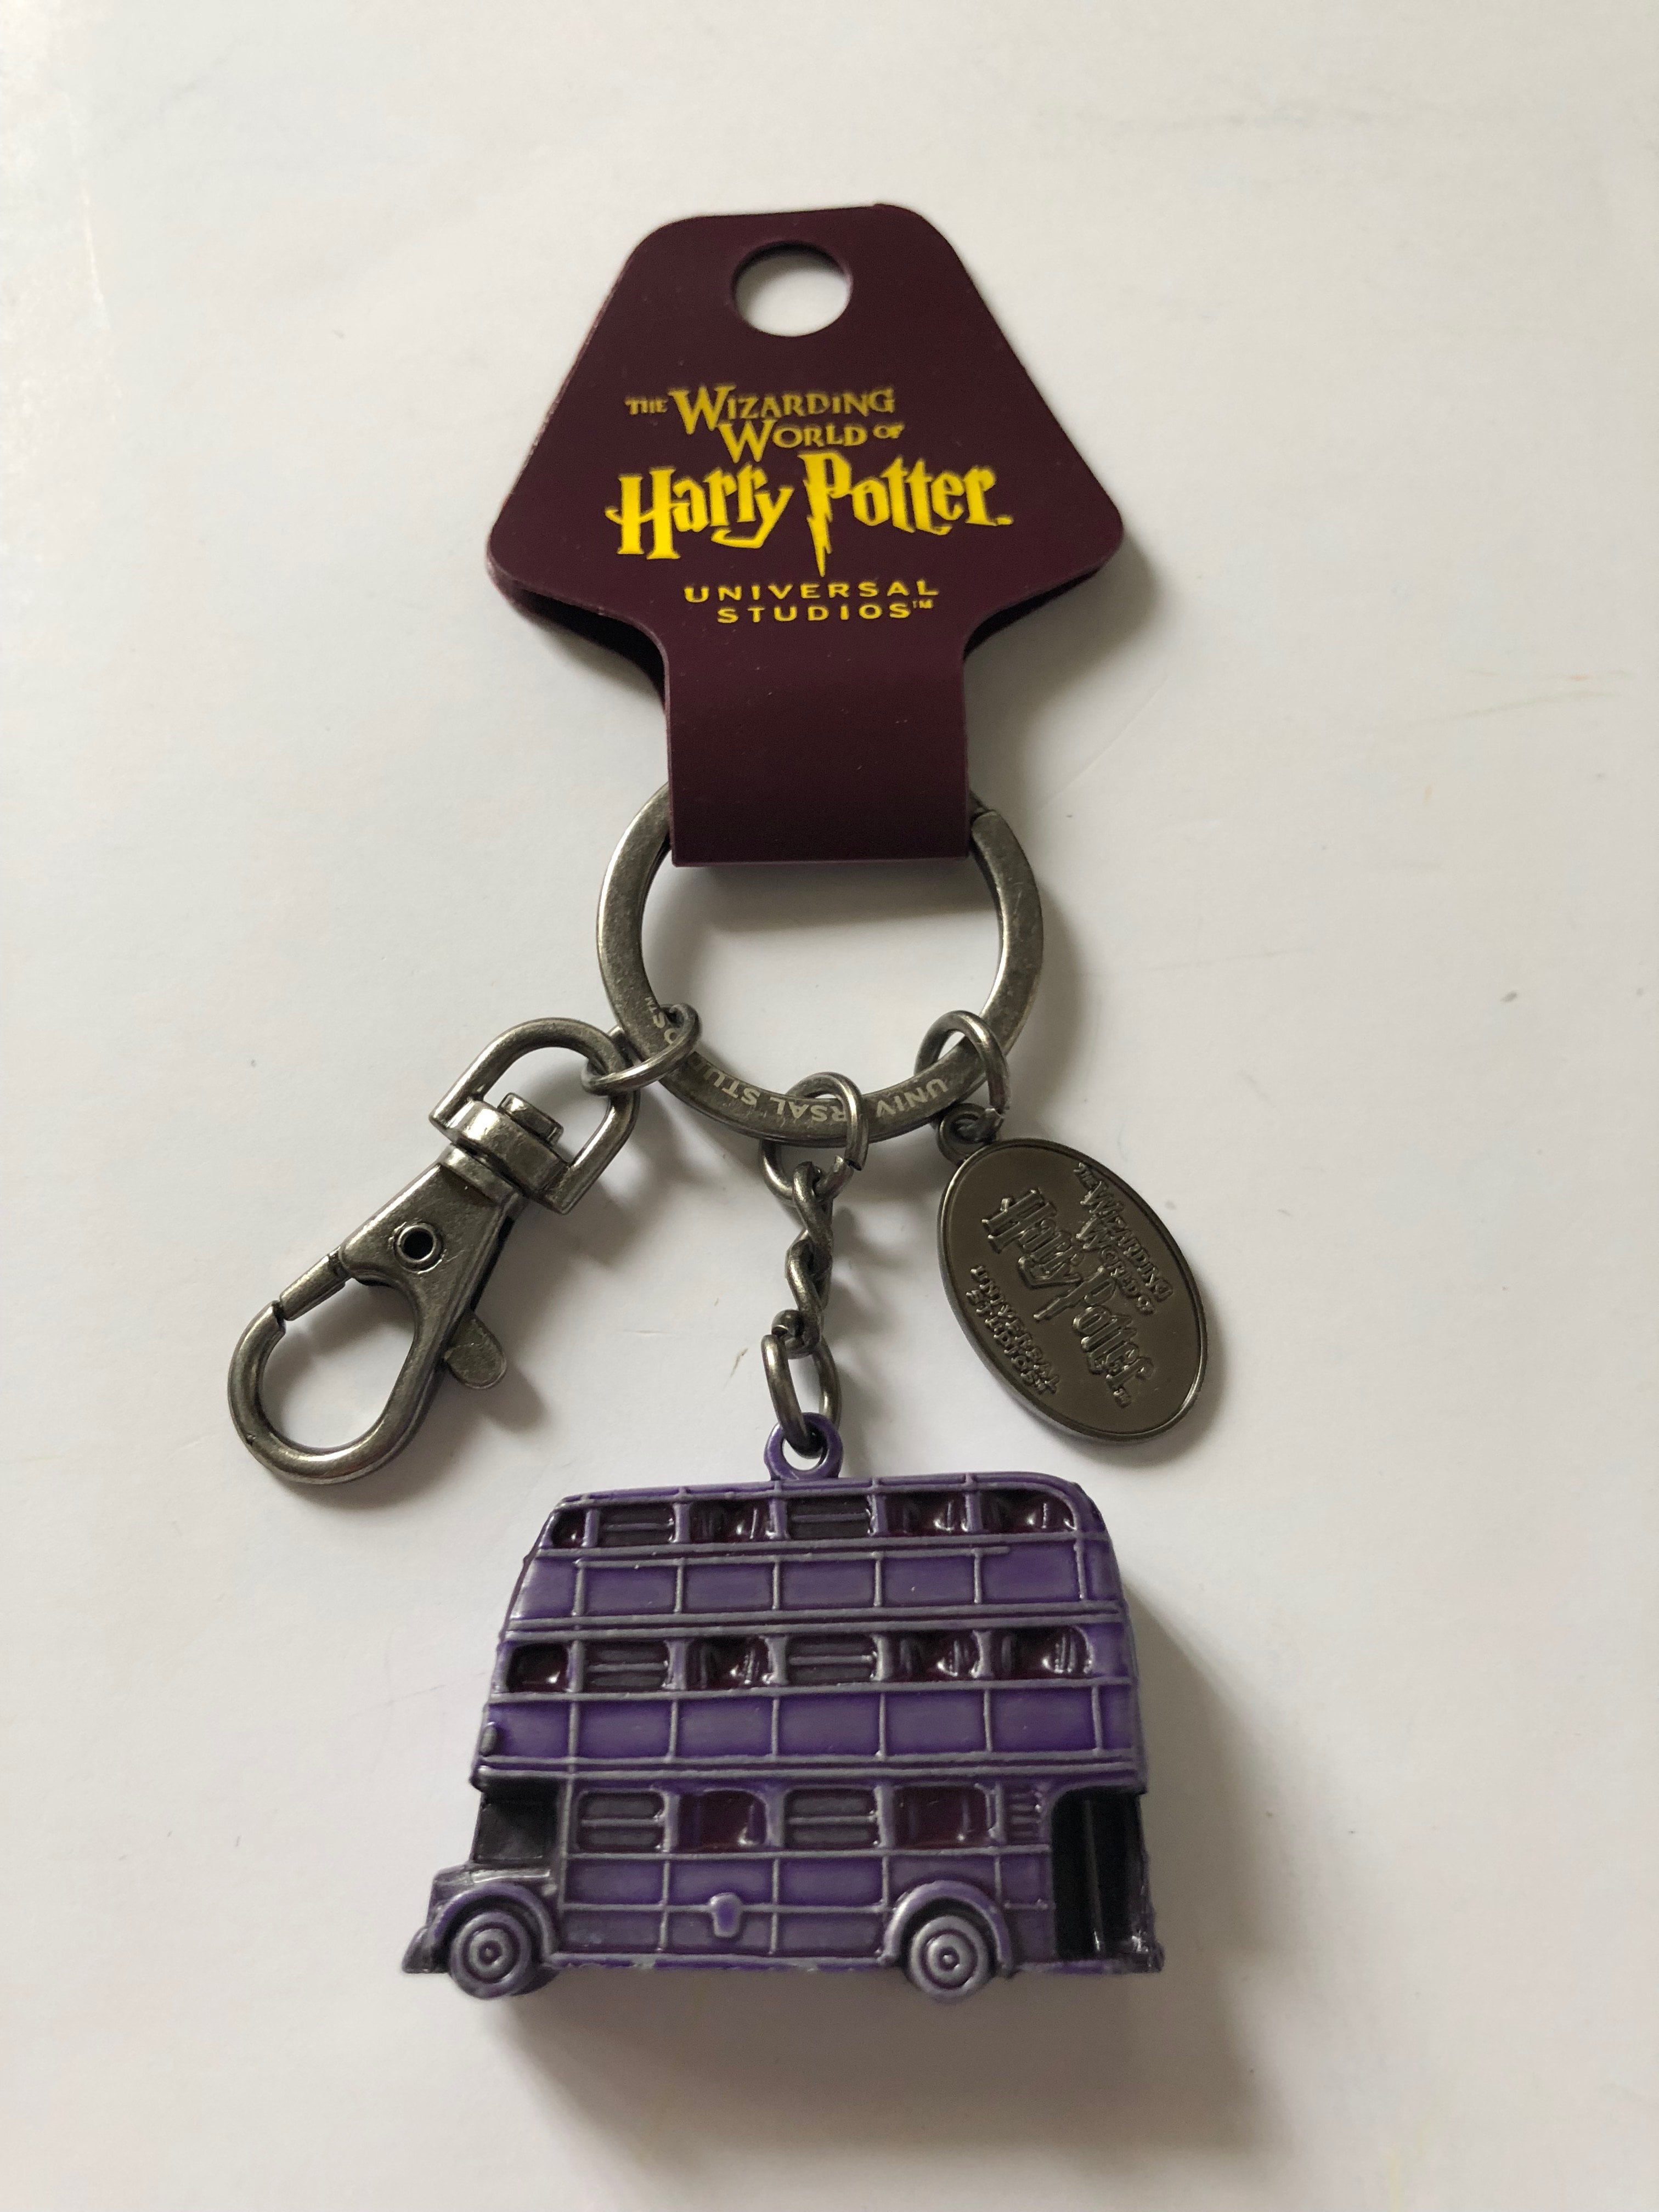 Official Warner Bros licence Harry Potter Knight Bus Keyring 